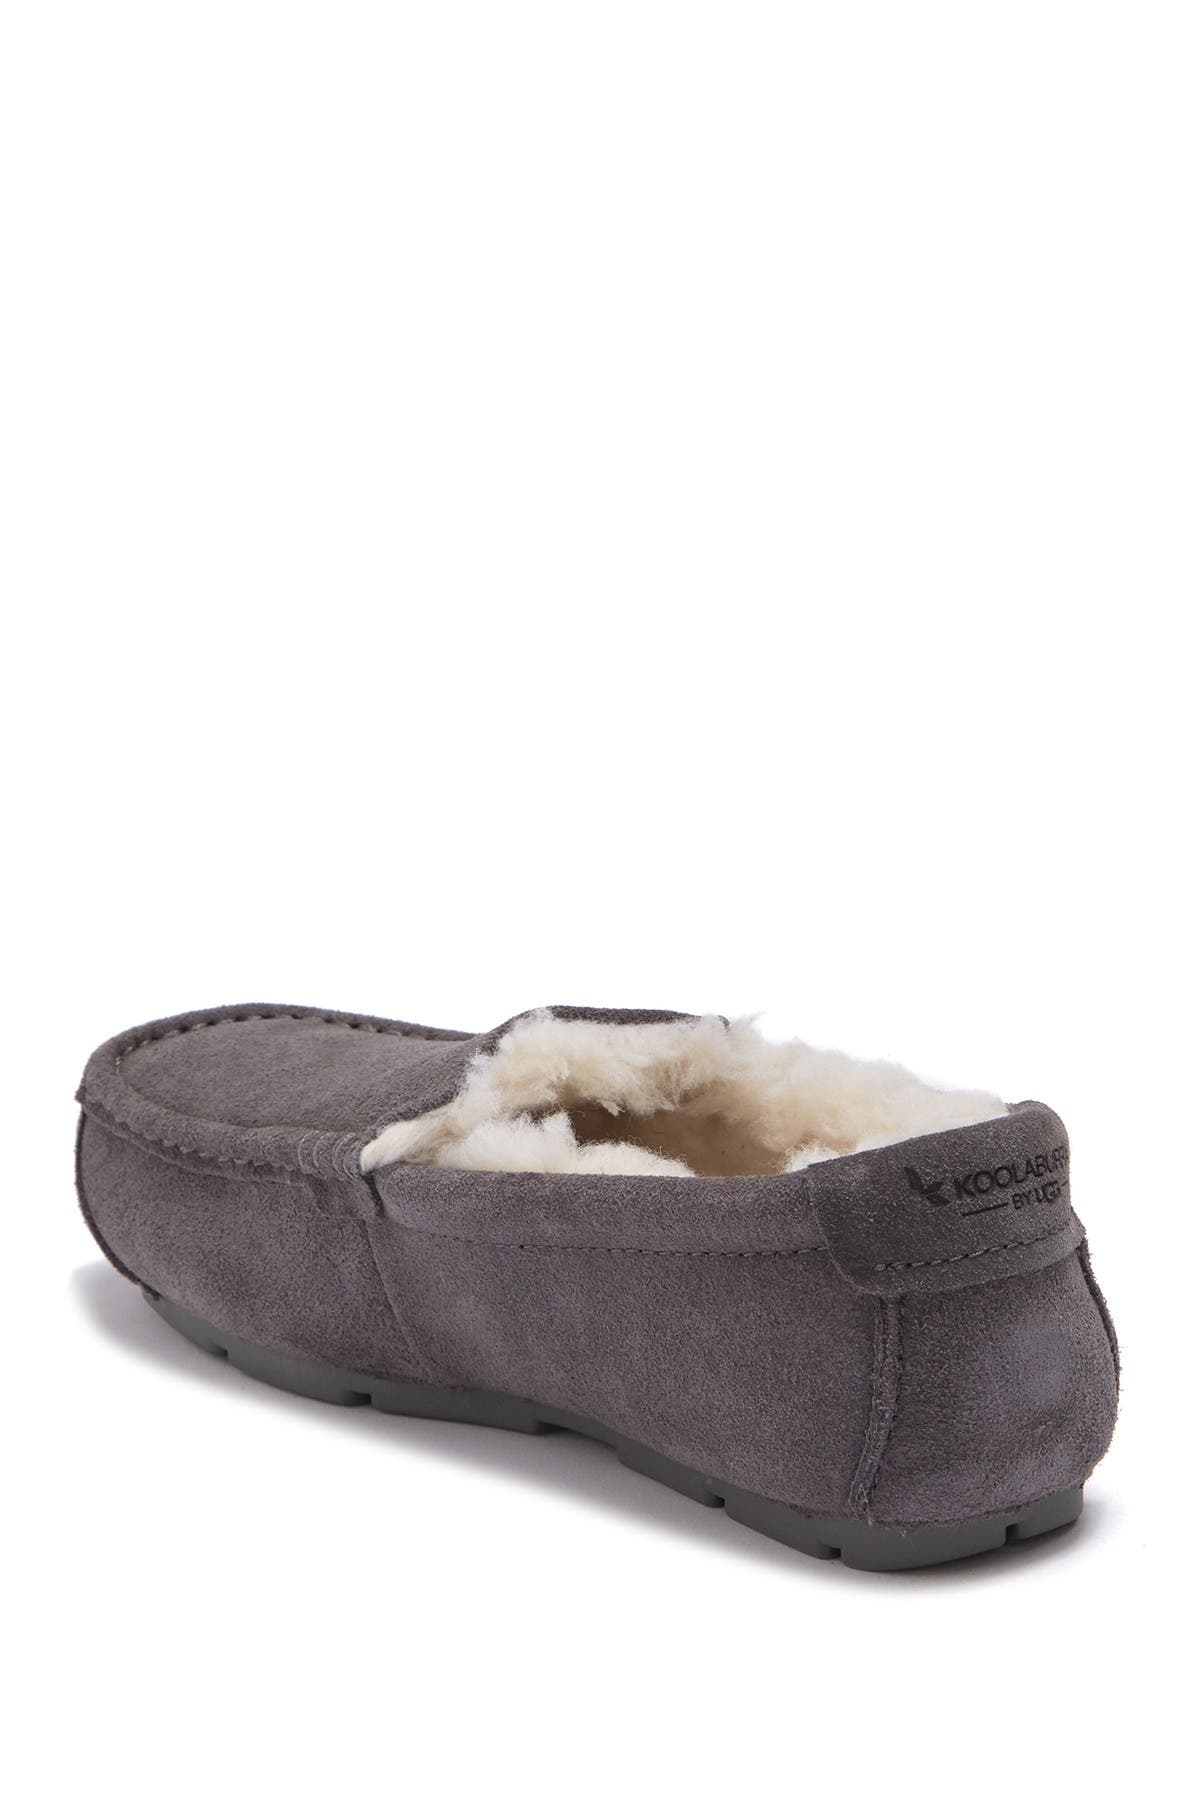 koolaburra by ugg tipton men's slippers